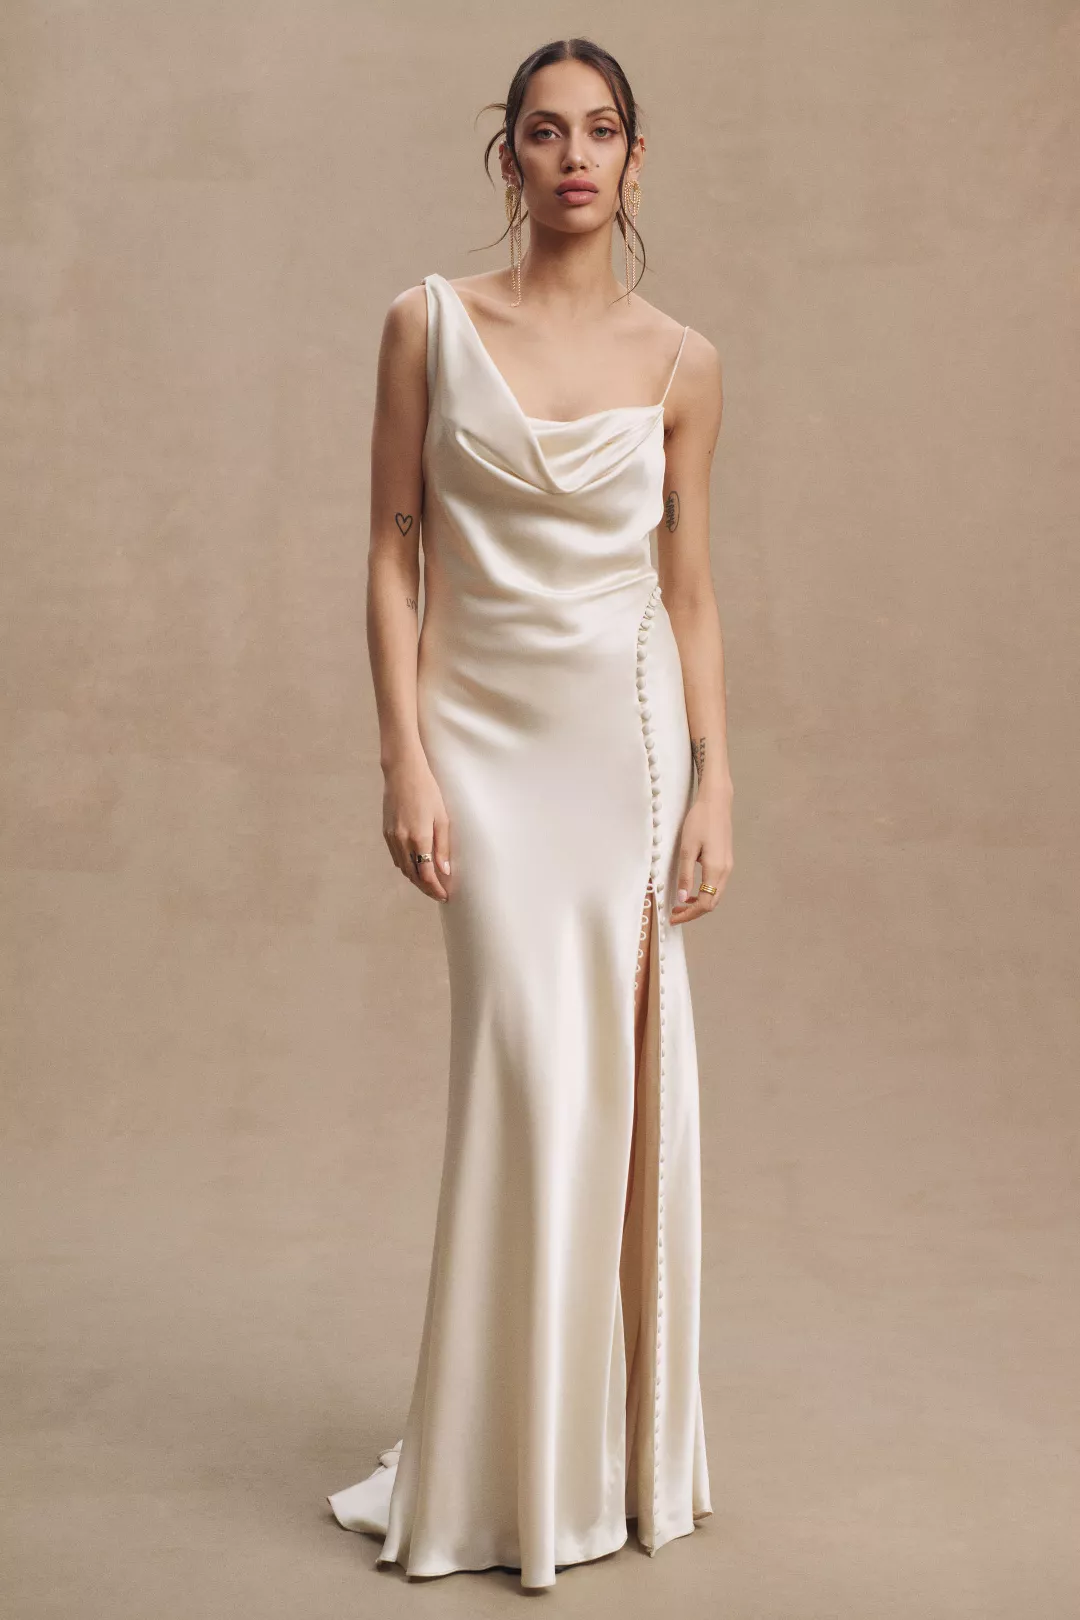 carolyn bessette wedding dress silk dress